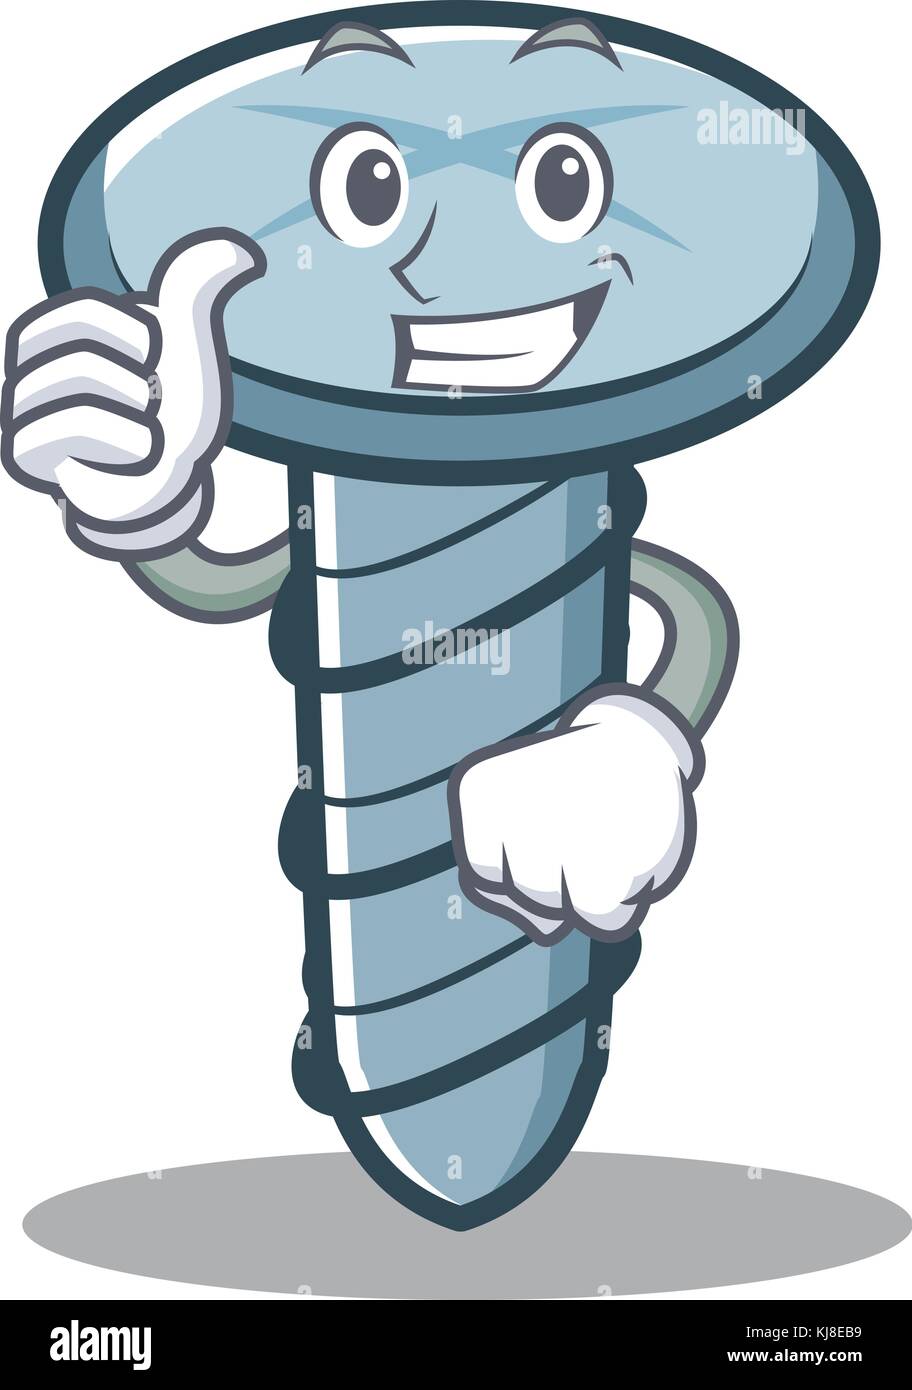 Thumbs up screw character cartoon style Stock Vector Image & Art - Alamy